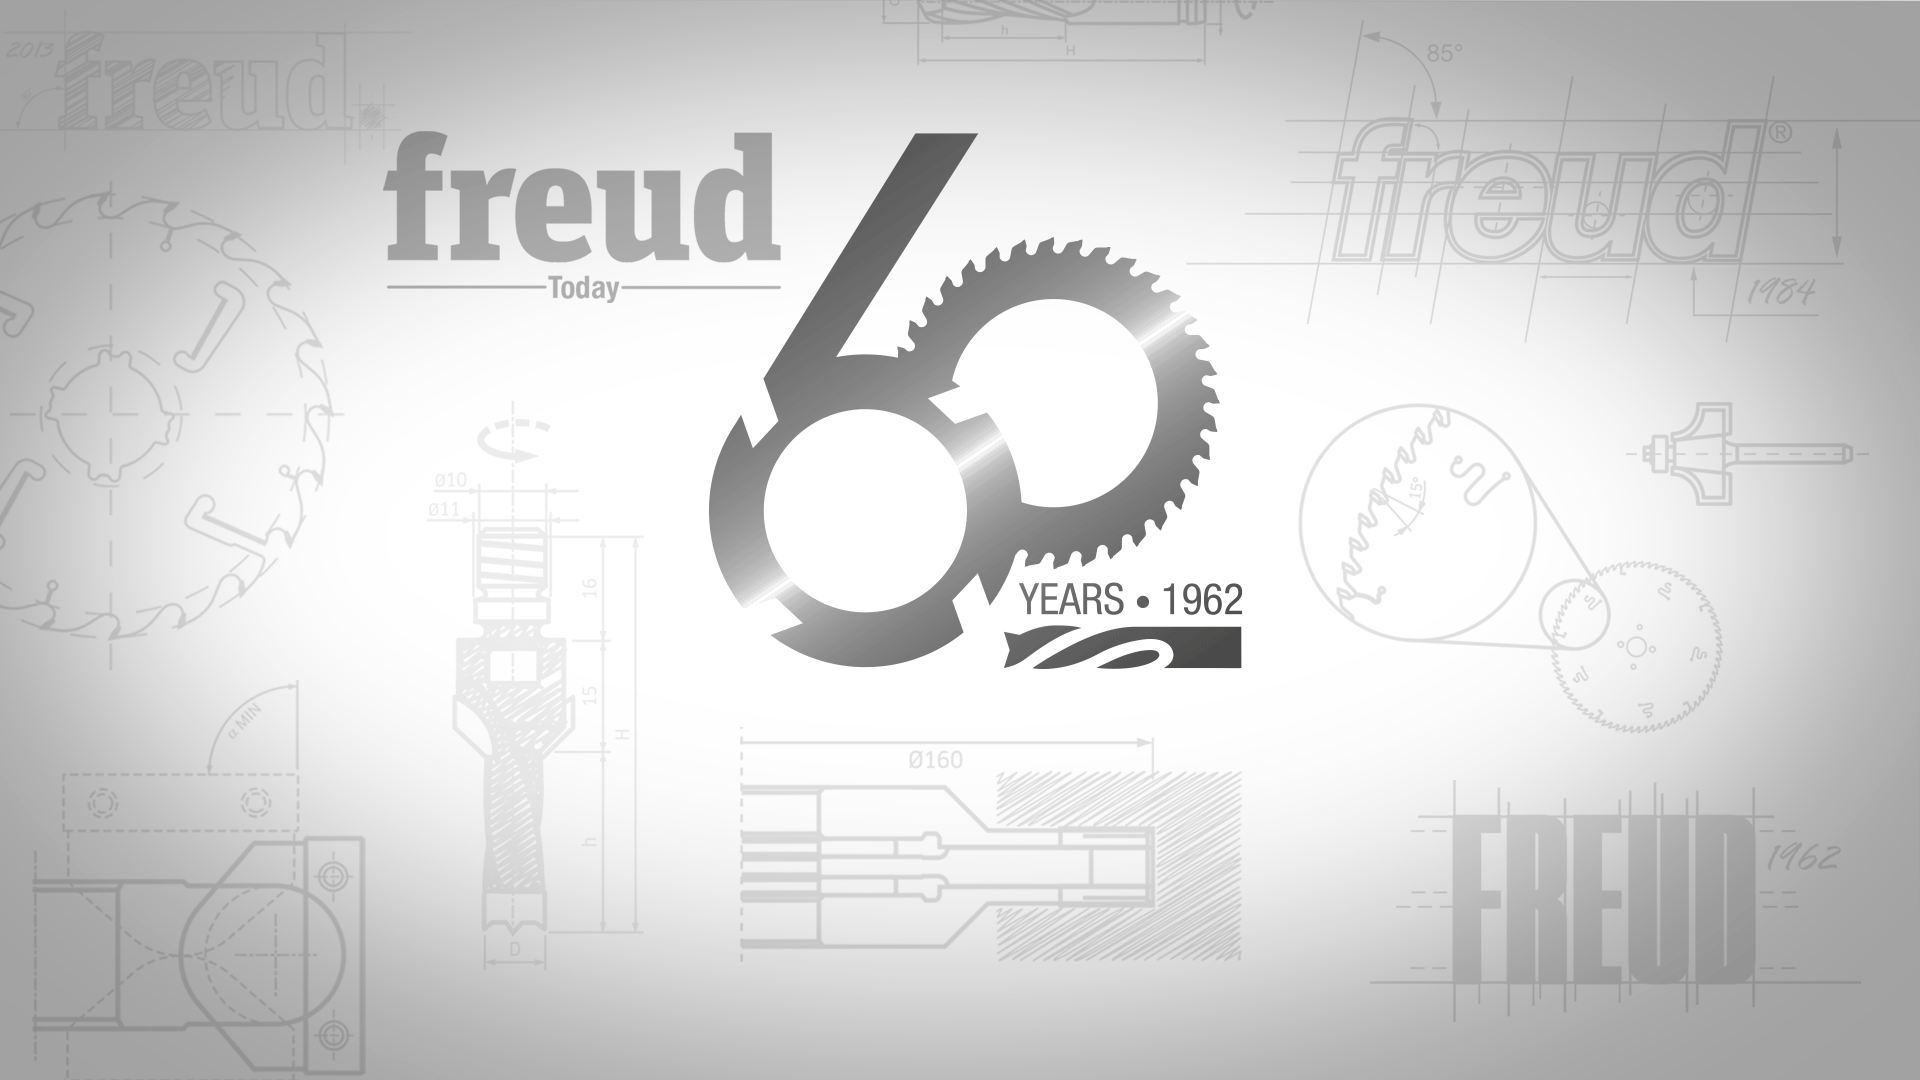 Freud, Premium Cutting Tools manufacturer since 1962